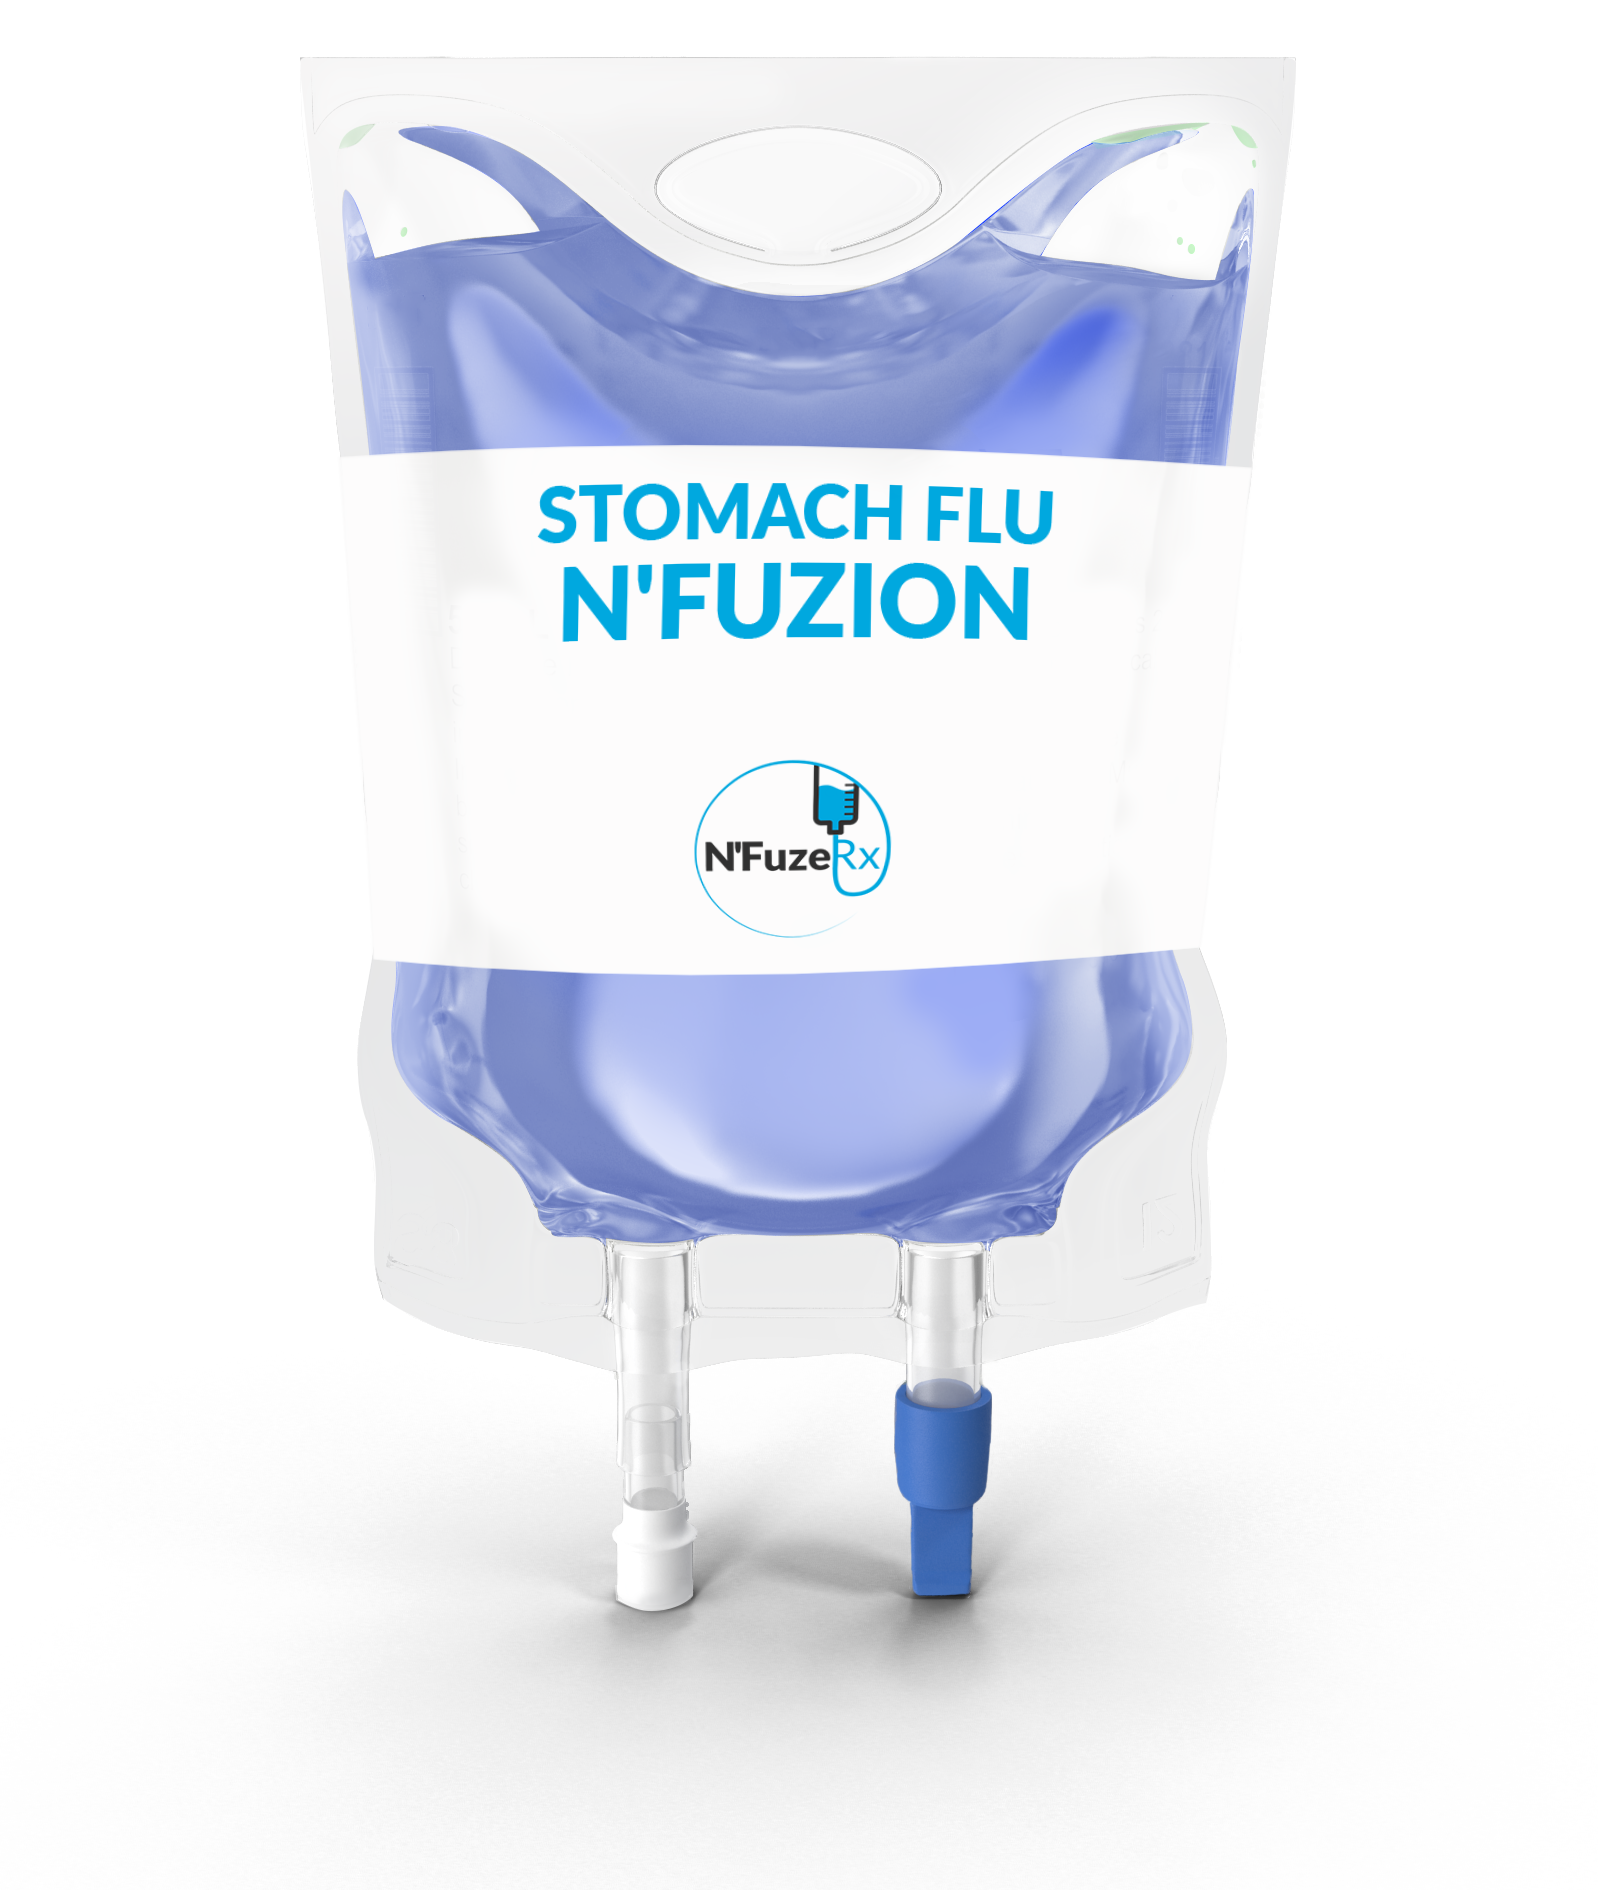 Stomach Flu IV Infusion N'Fuze RX Revolutionizing AntiAging & Wellness